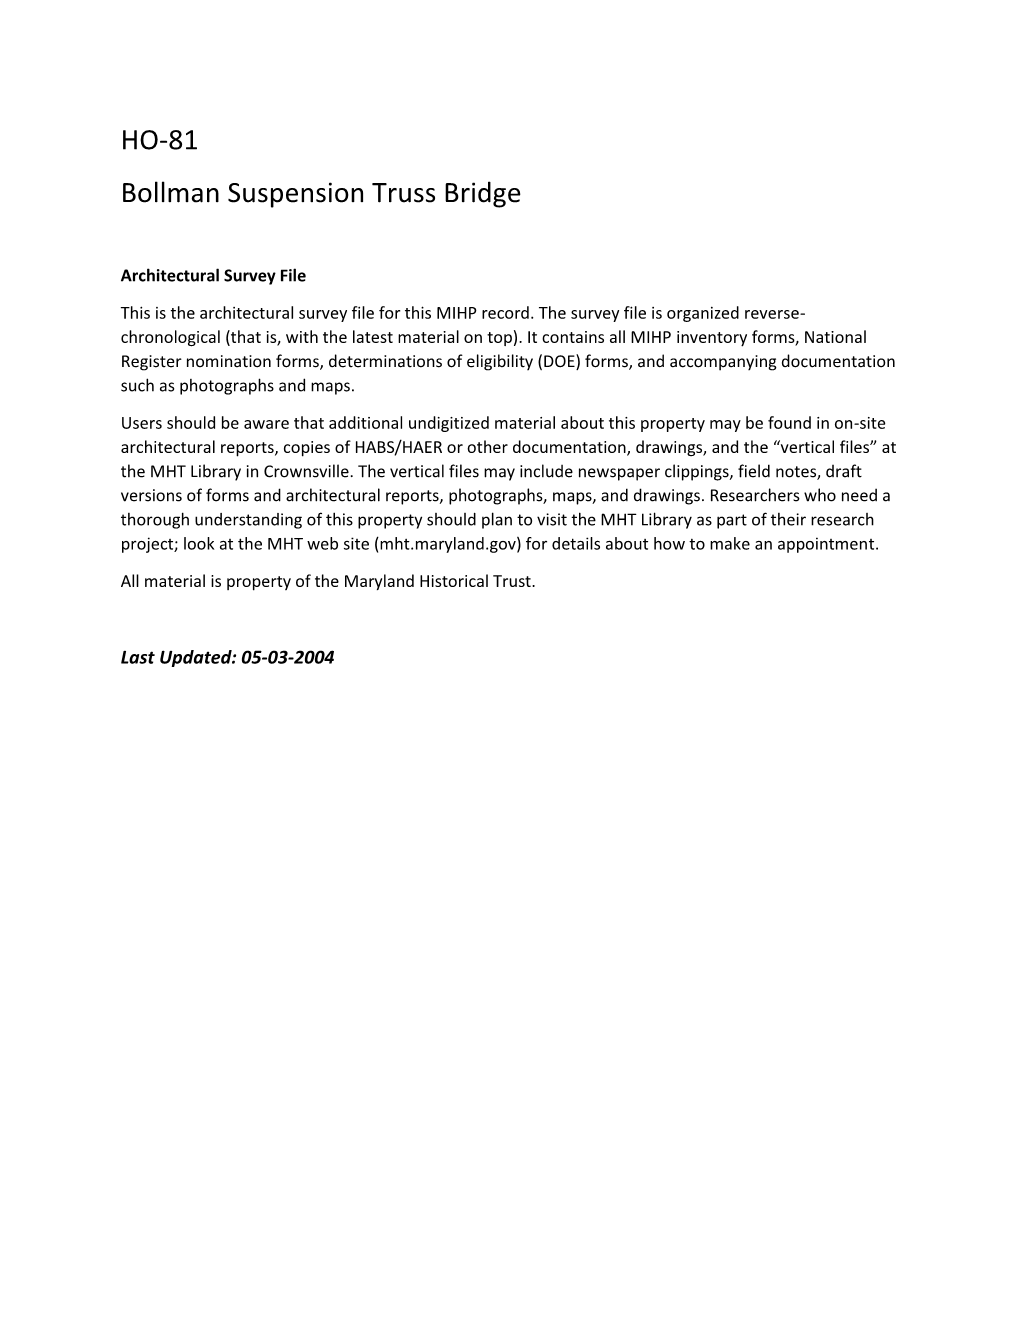 HO-81 Bollman Suspension Truss Bridge